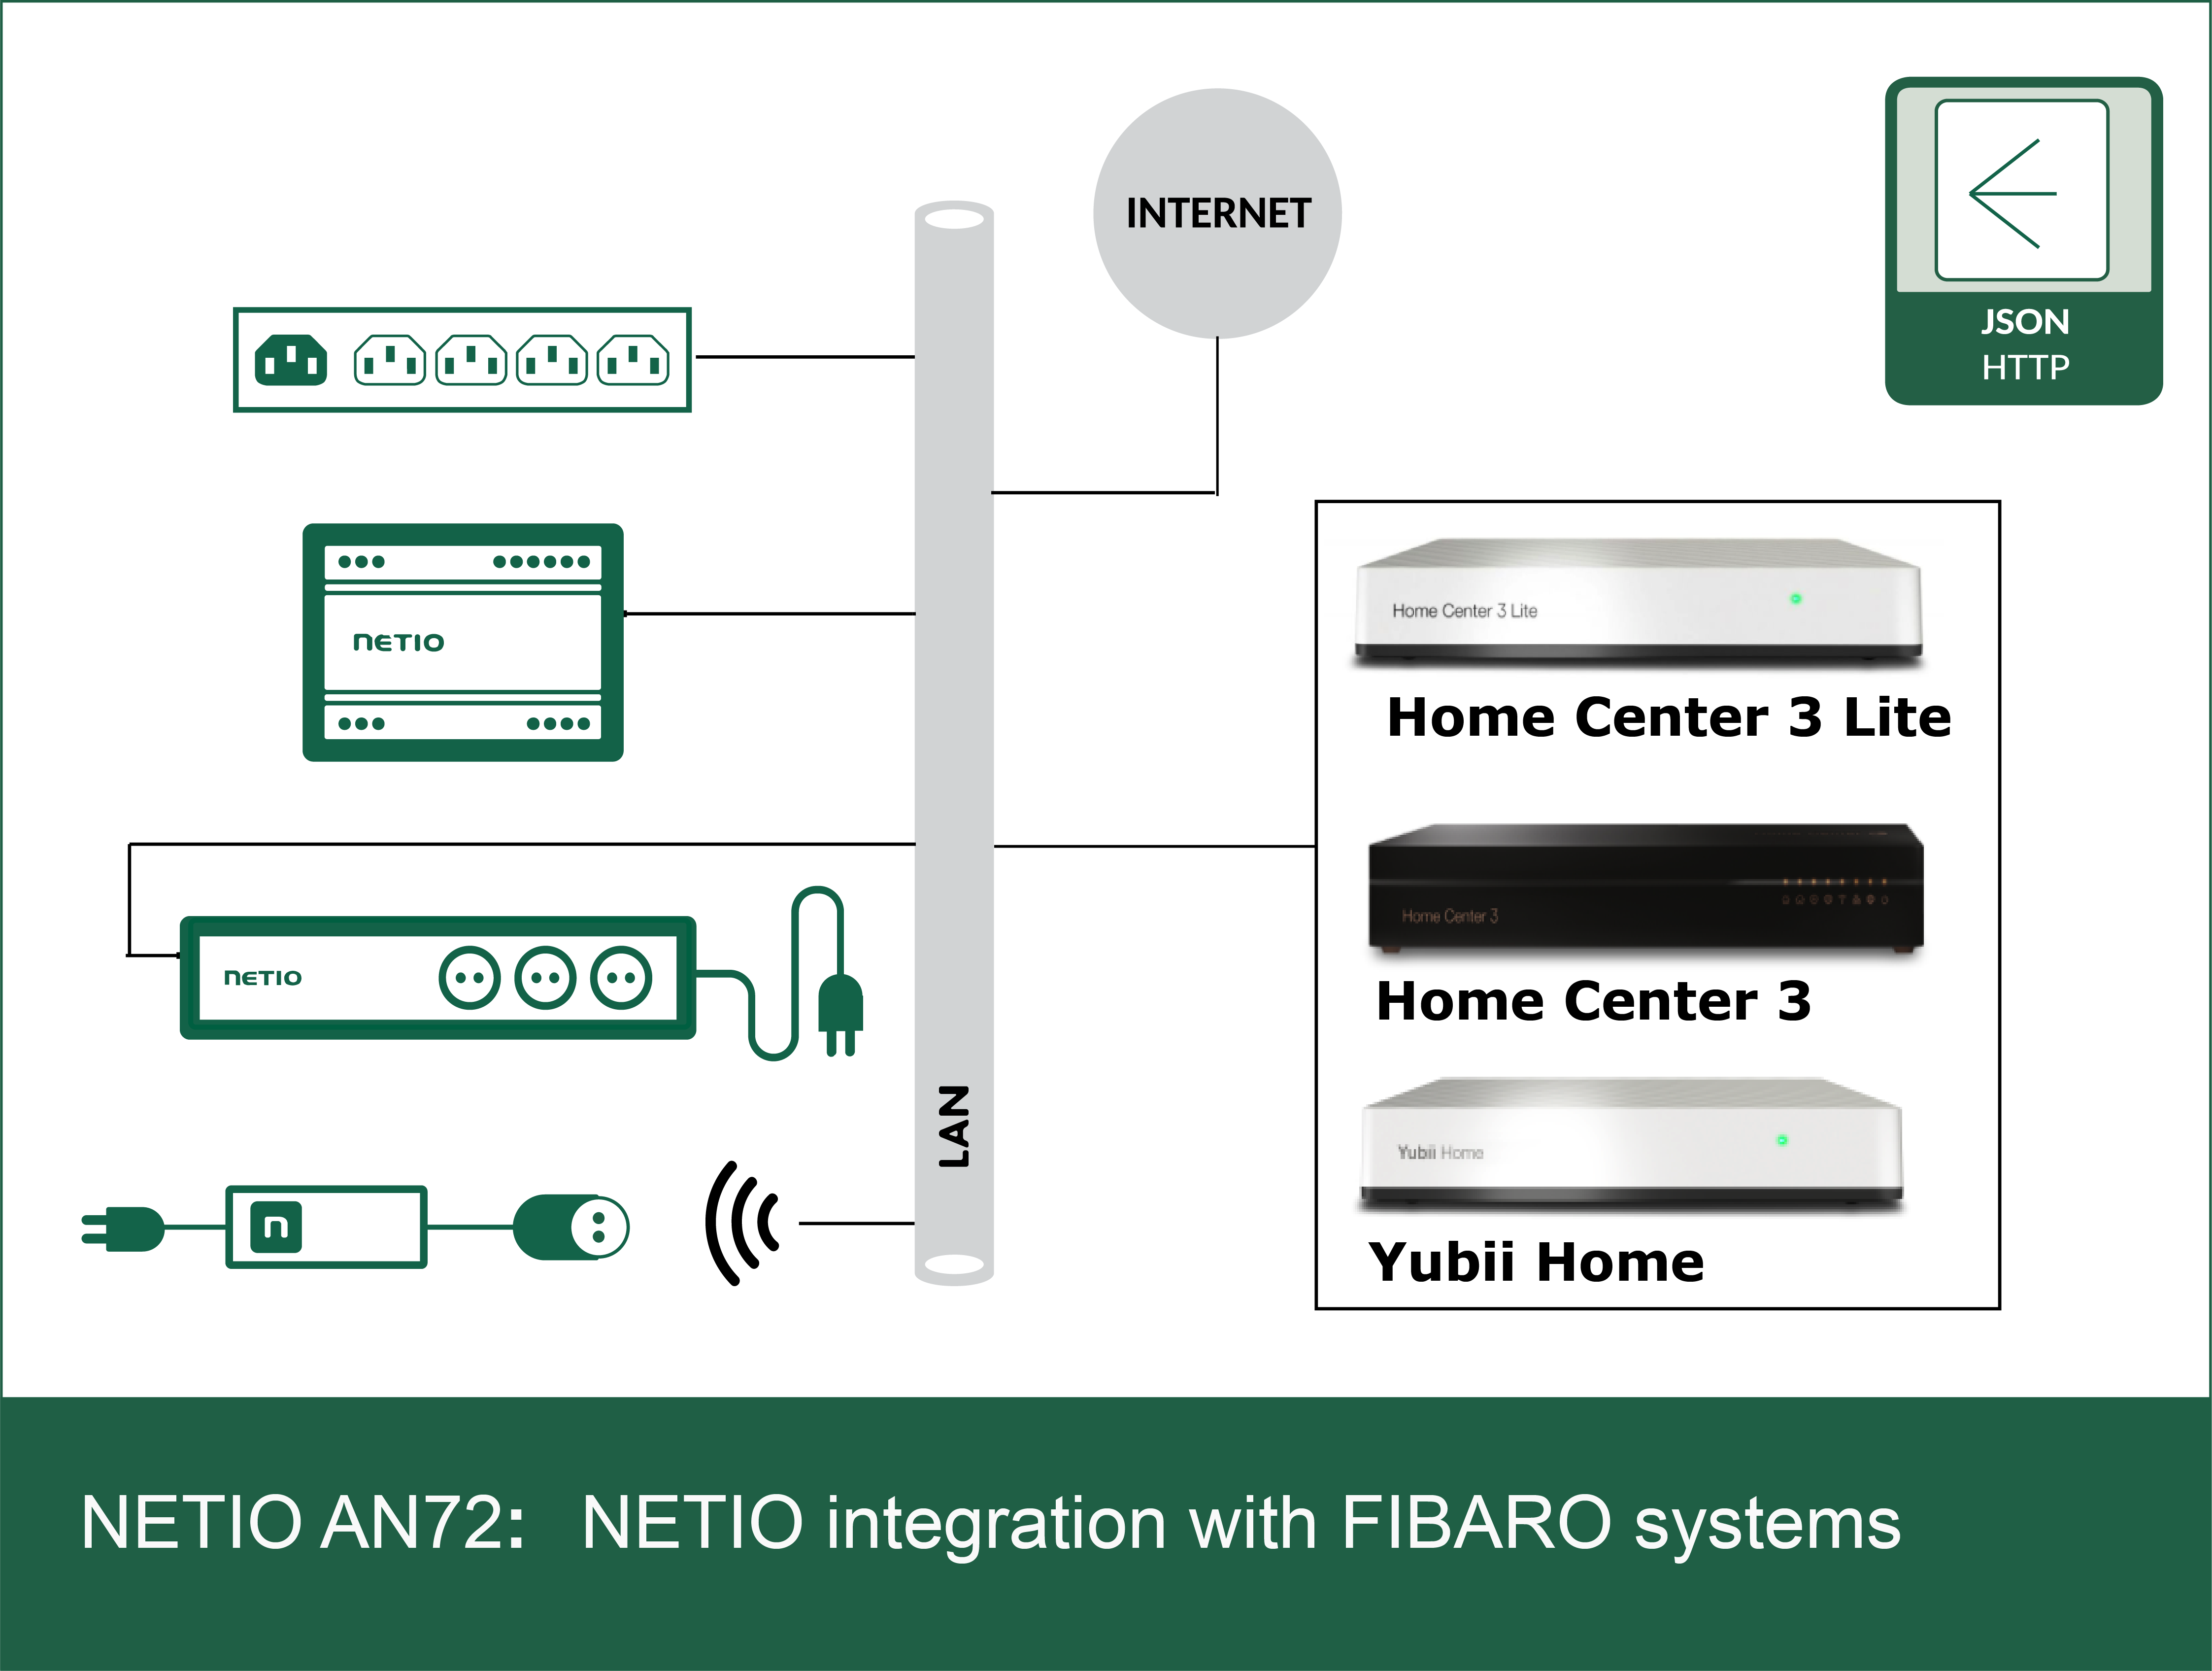 AN72 FIBARO system integrates NETIO PDUs